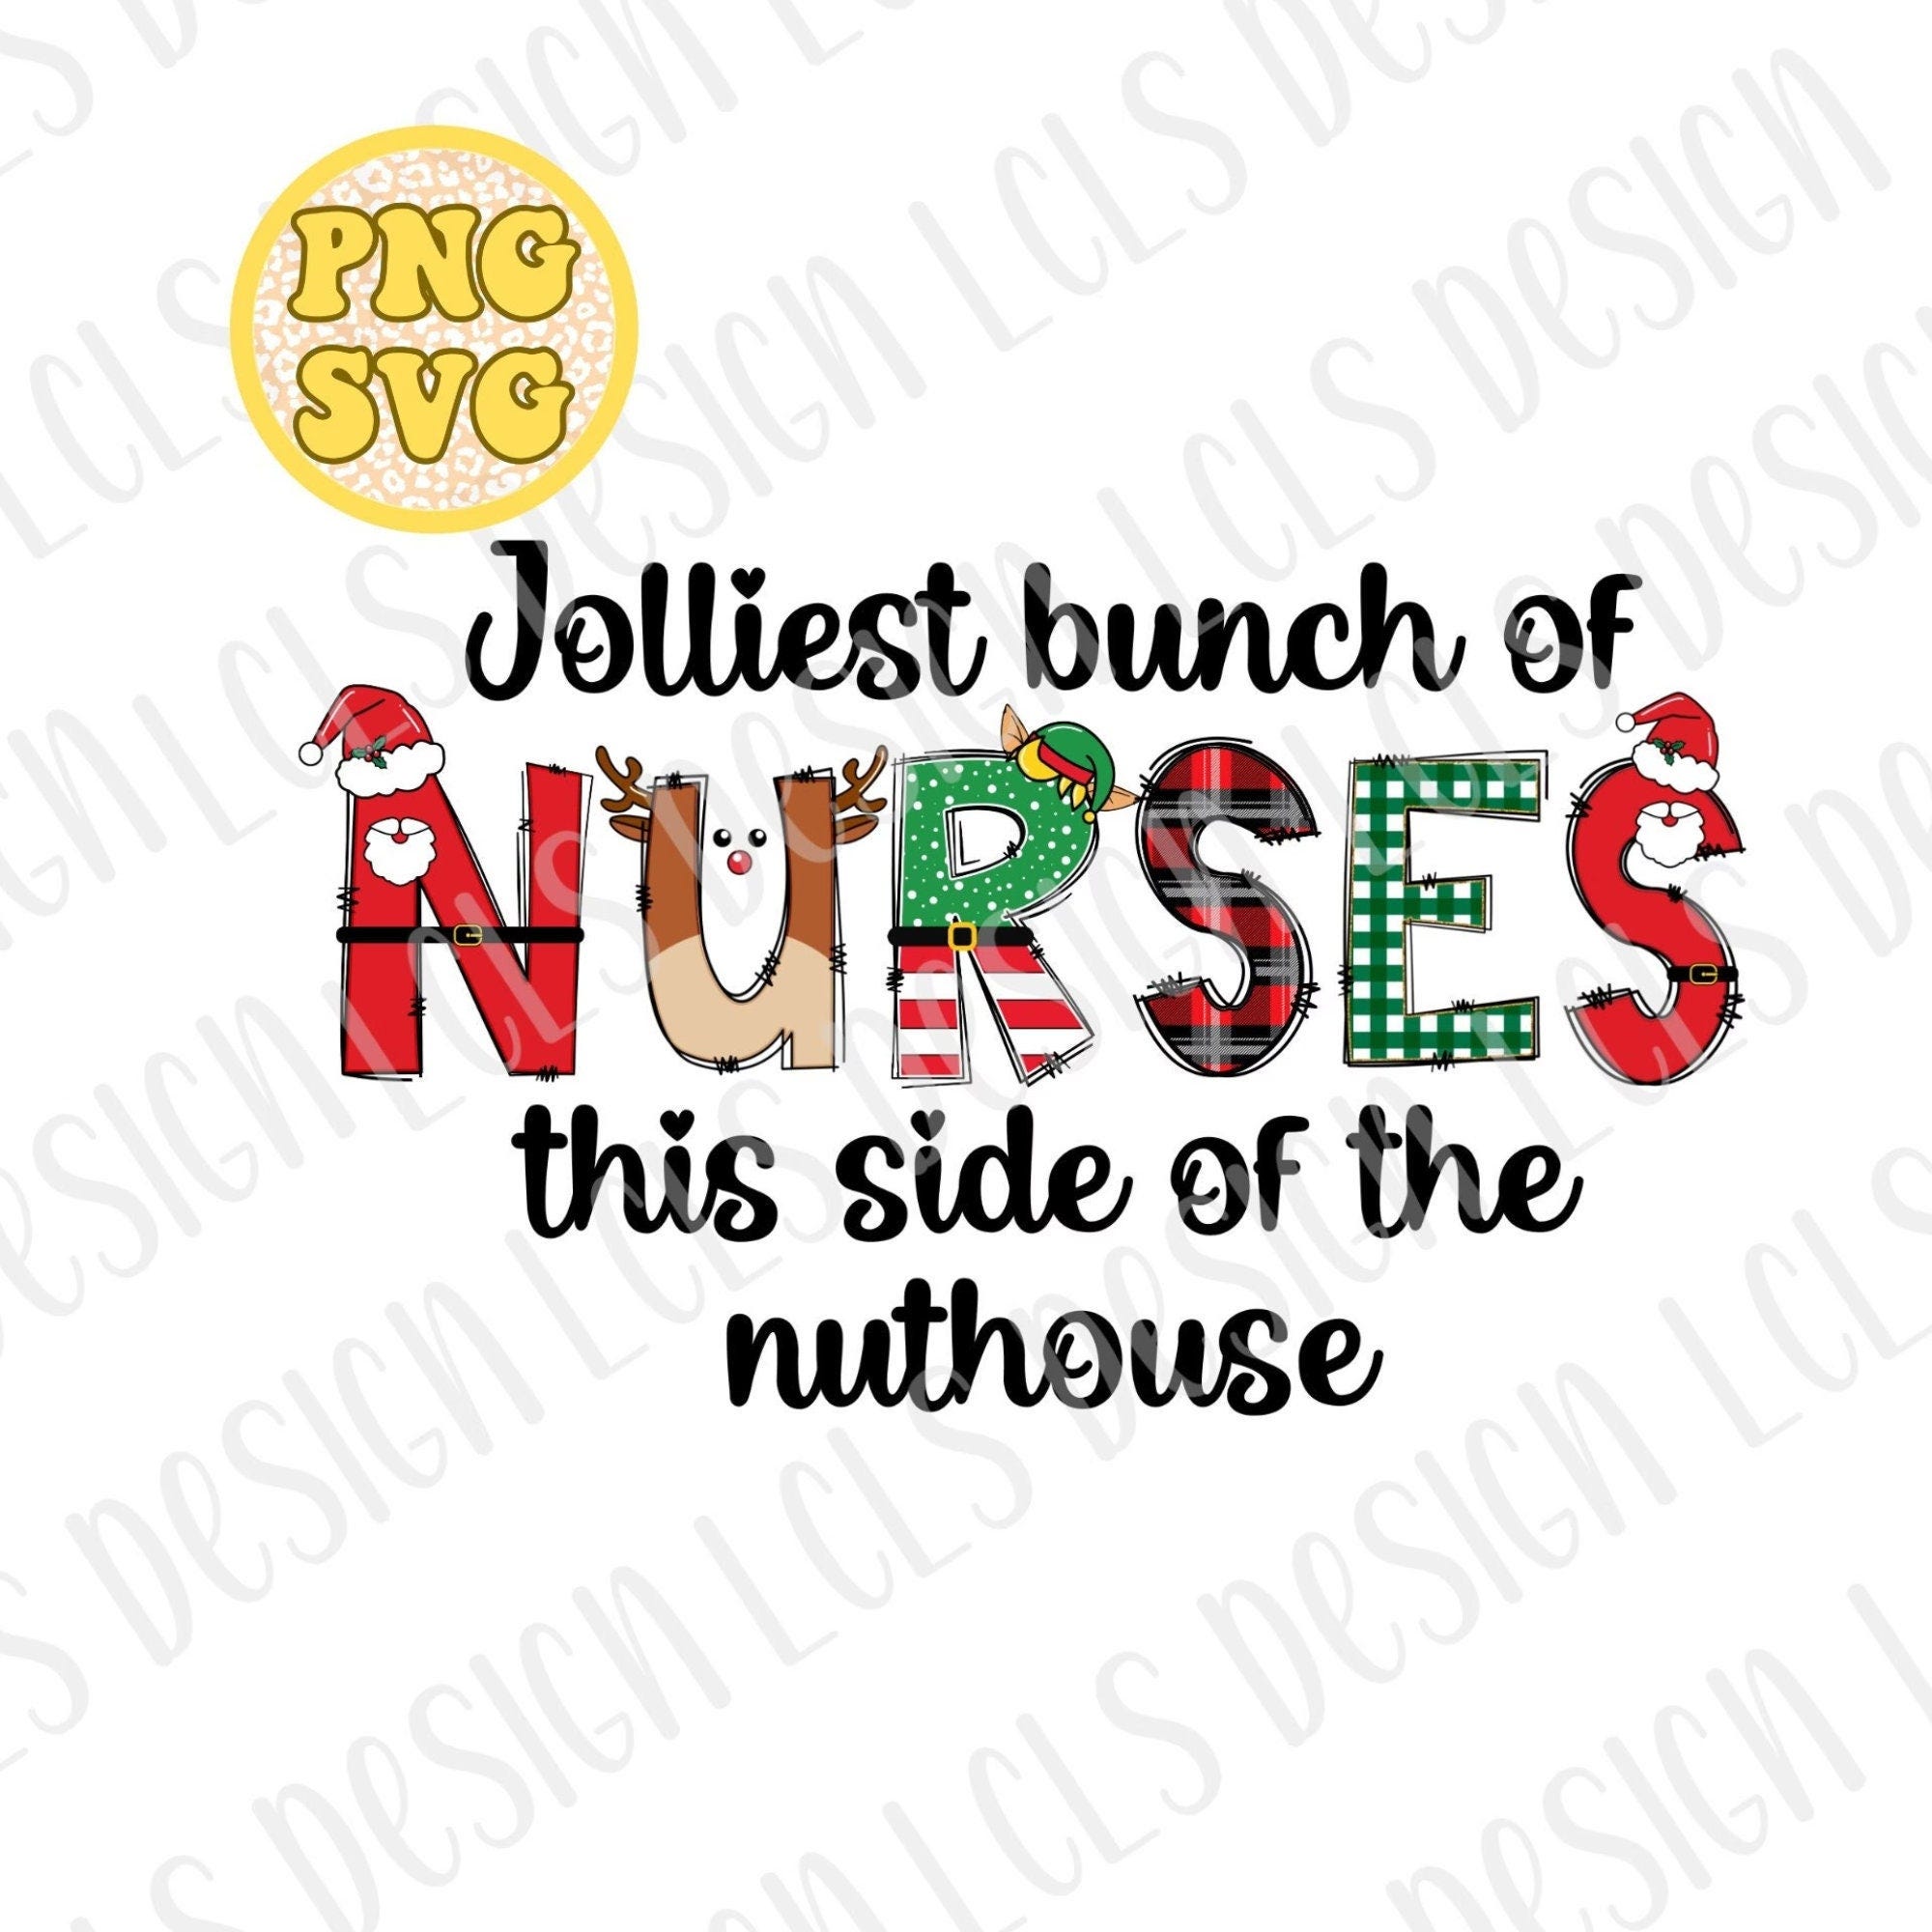 Nurse Christmas svg, Nurse svg, retro Christmas png, trending svg, retro santa png, santa claus png, stethoscope svg, mother baby nurse